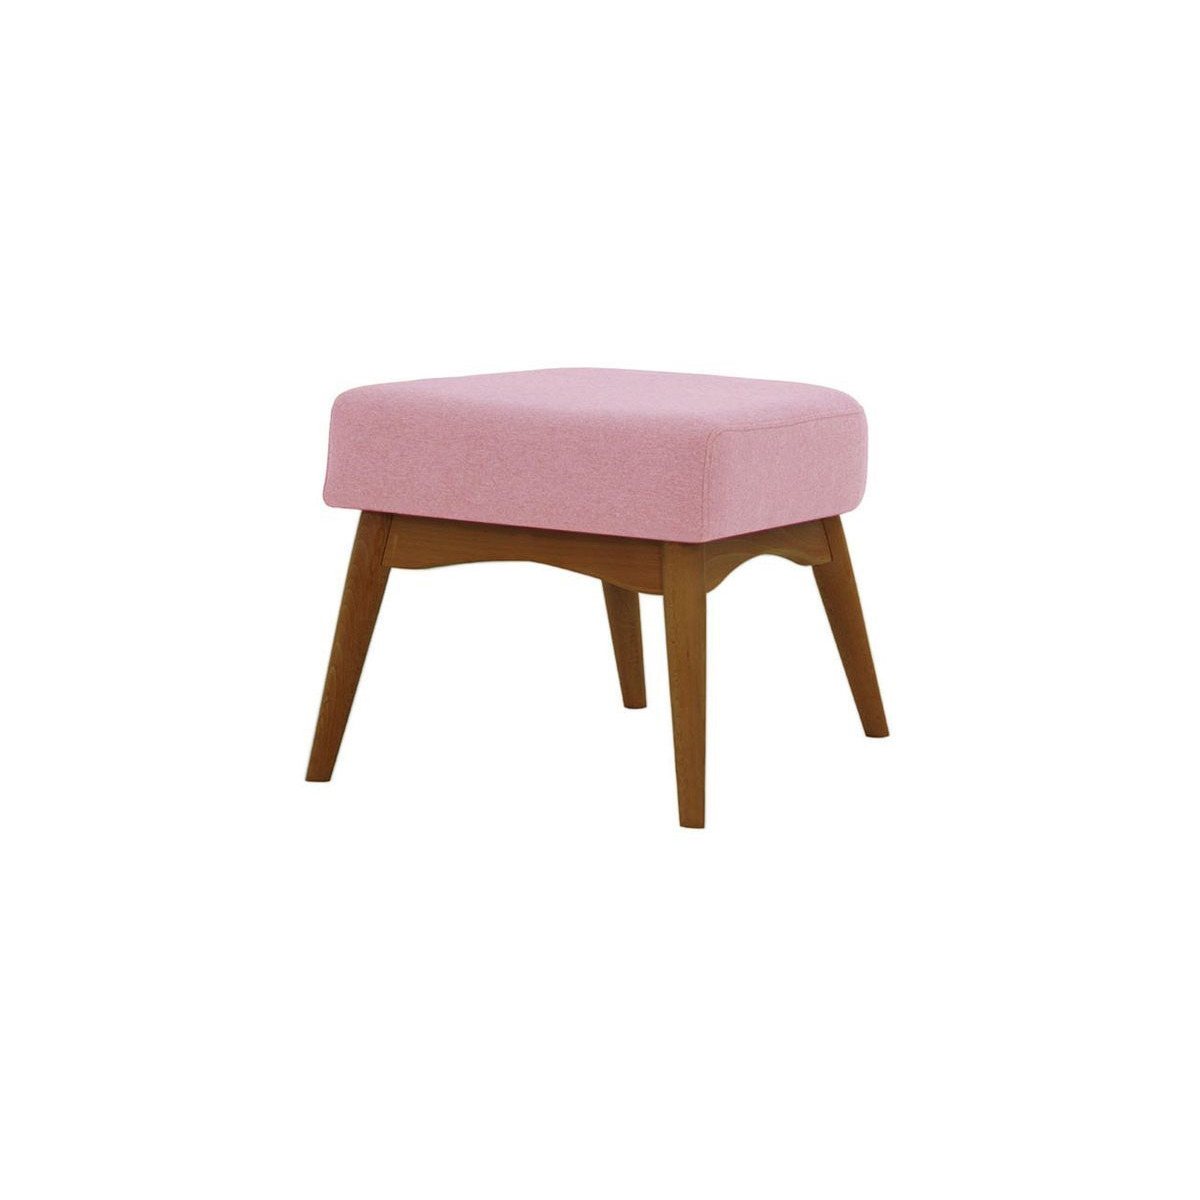 Savano Footstool, pink, Leg colour: dark oak - image 1